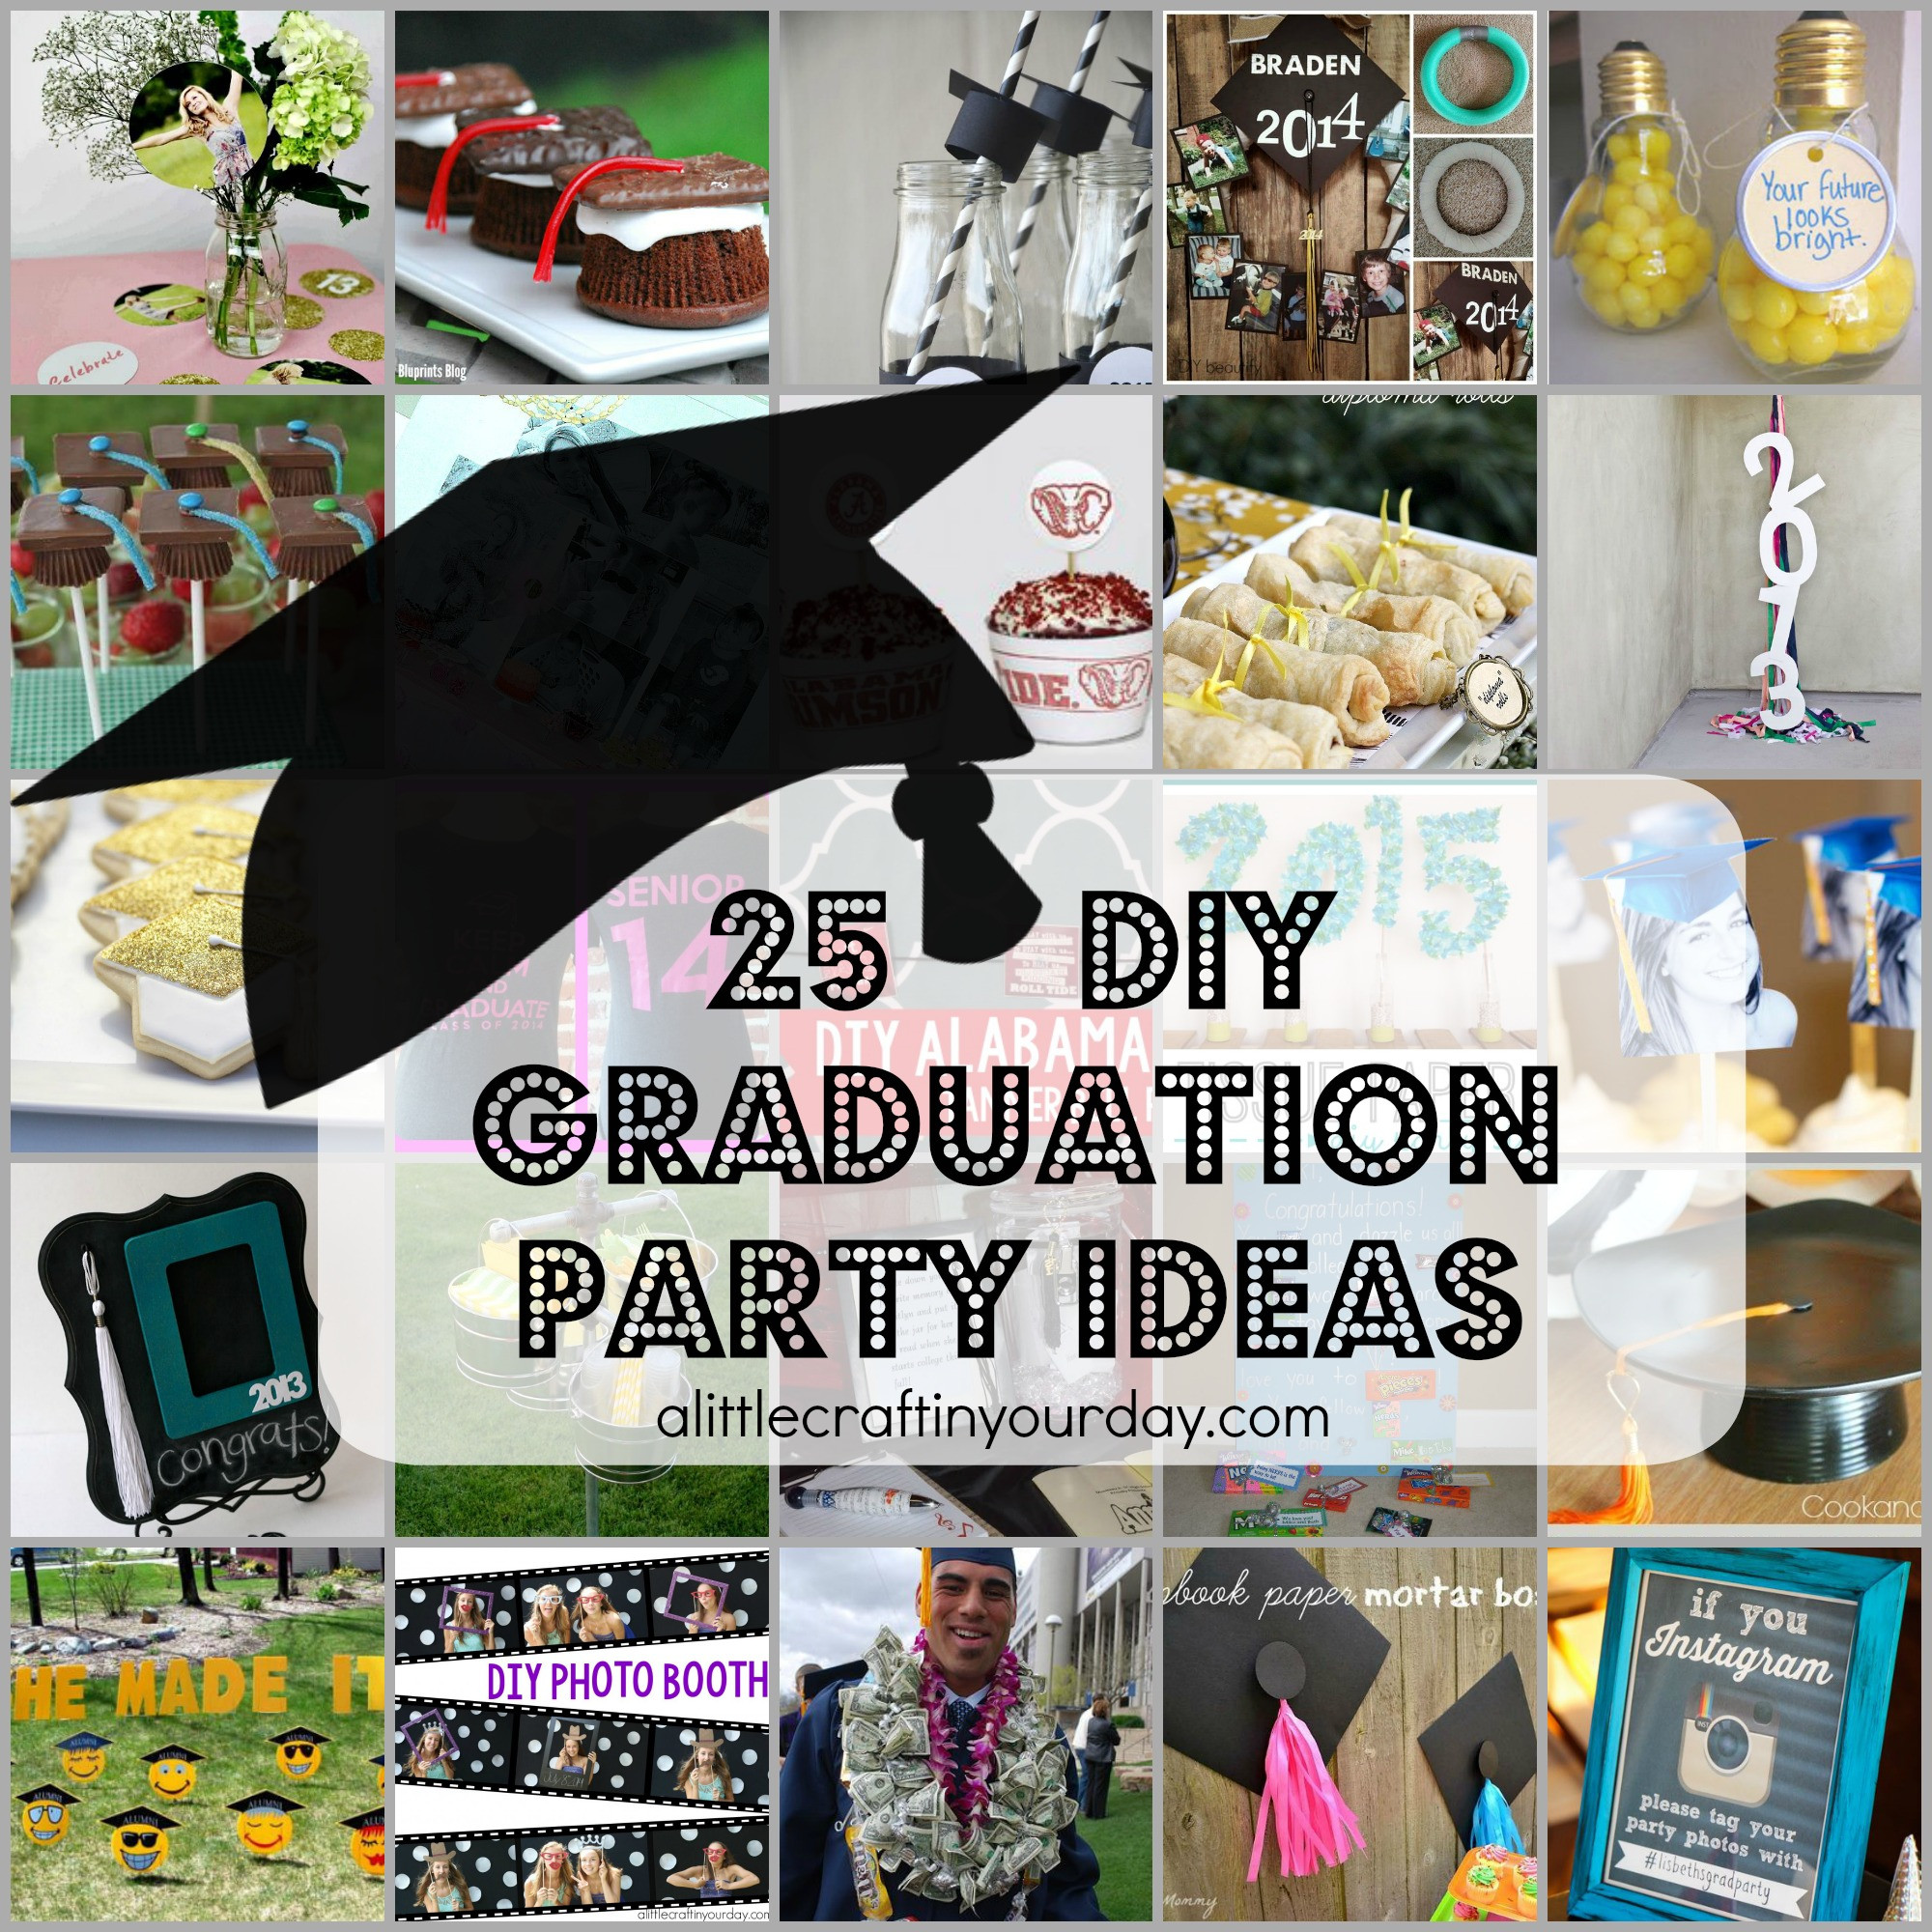 Girl High School Graduation Party Ideas
 25 DIY Graduation Party Ideas A Little Craft In Your Day